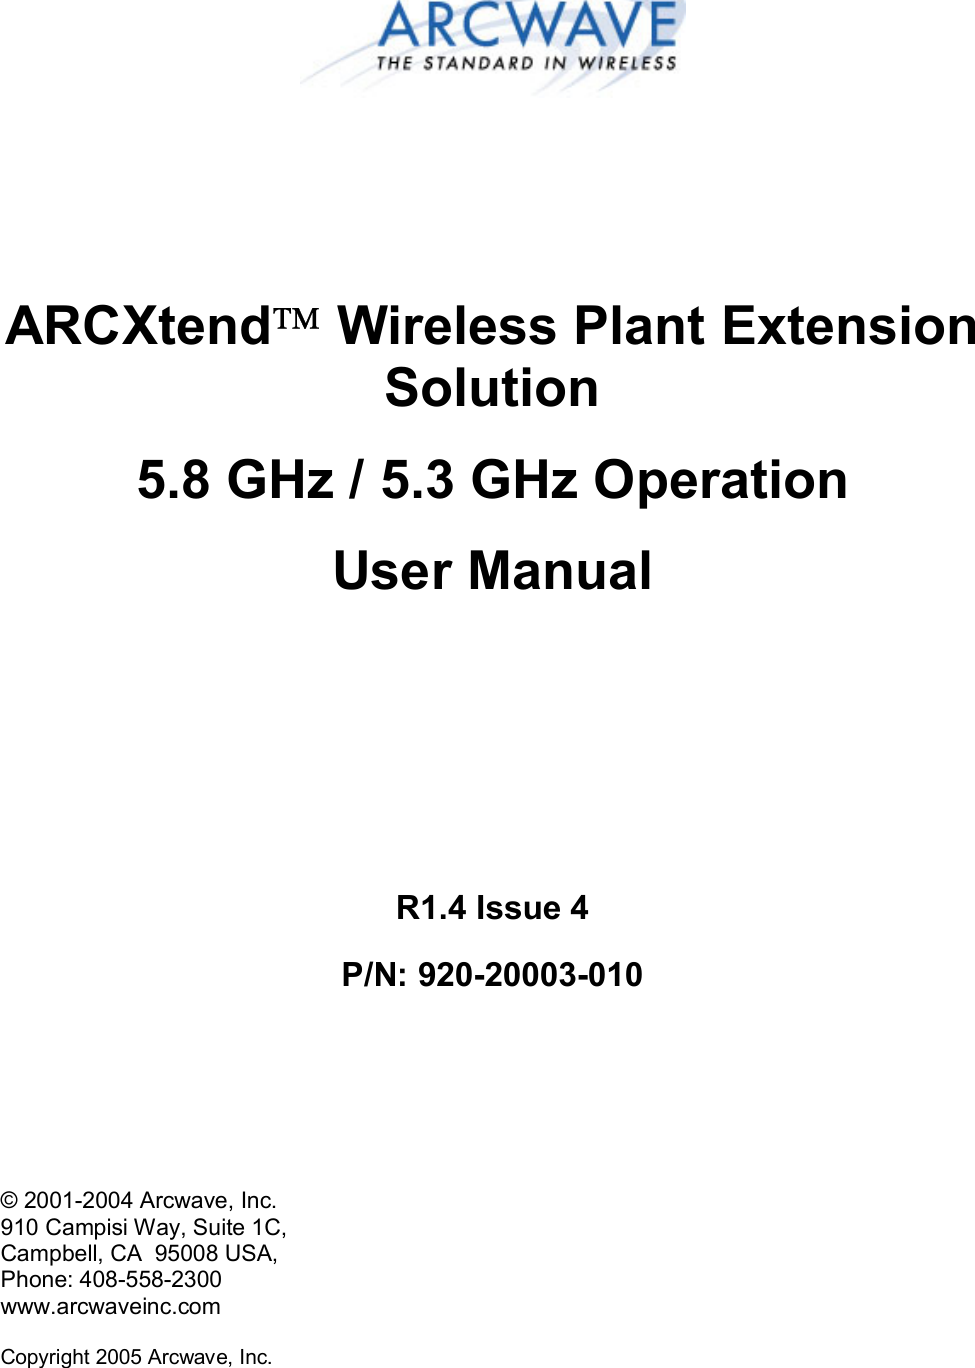 Copyright 2005 Arcwave, Inc.      ARCXtend Wireless Plant Extension Solution 5.8 GHz / 5.3 GHz Operation User Manual     R1.4 Issue 4 P/N: 920-20003-010     © 2001-2004 Arcwave, Inc. 910 Campisi Way, Suite 1C,  Campbell, CA  95008 USA,  Phone: 408-558-2300 www.arcwaveinc.com 